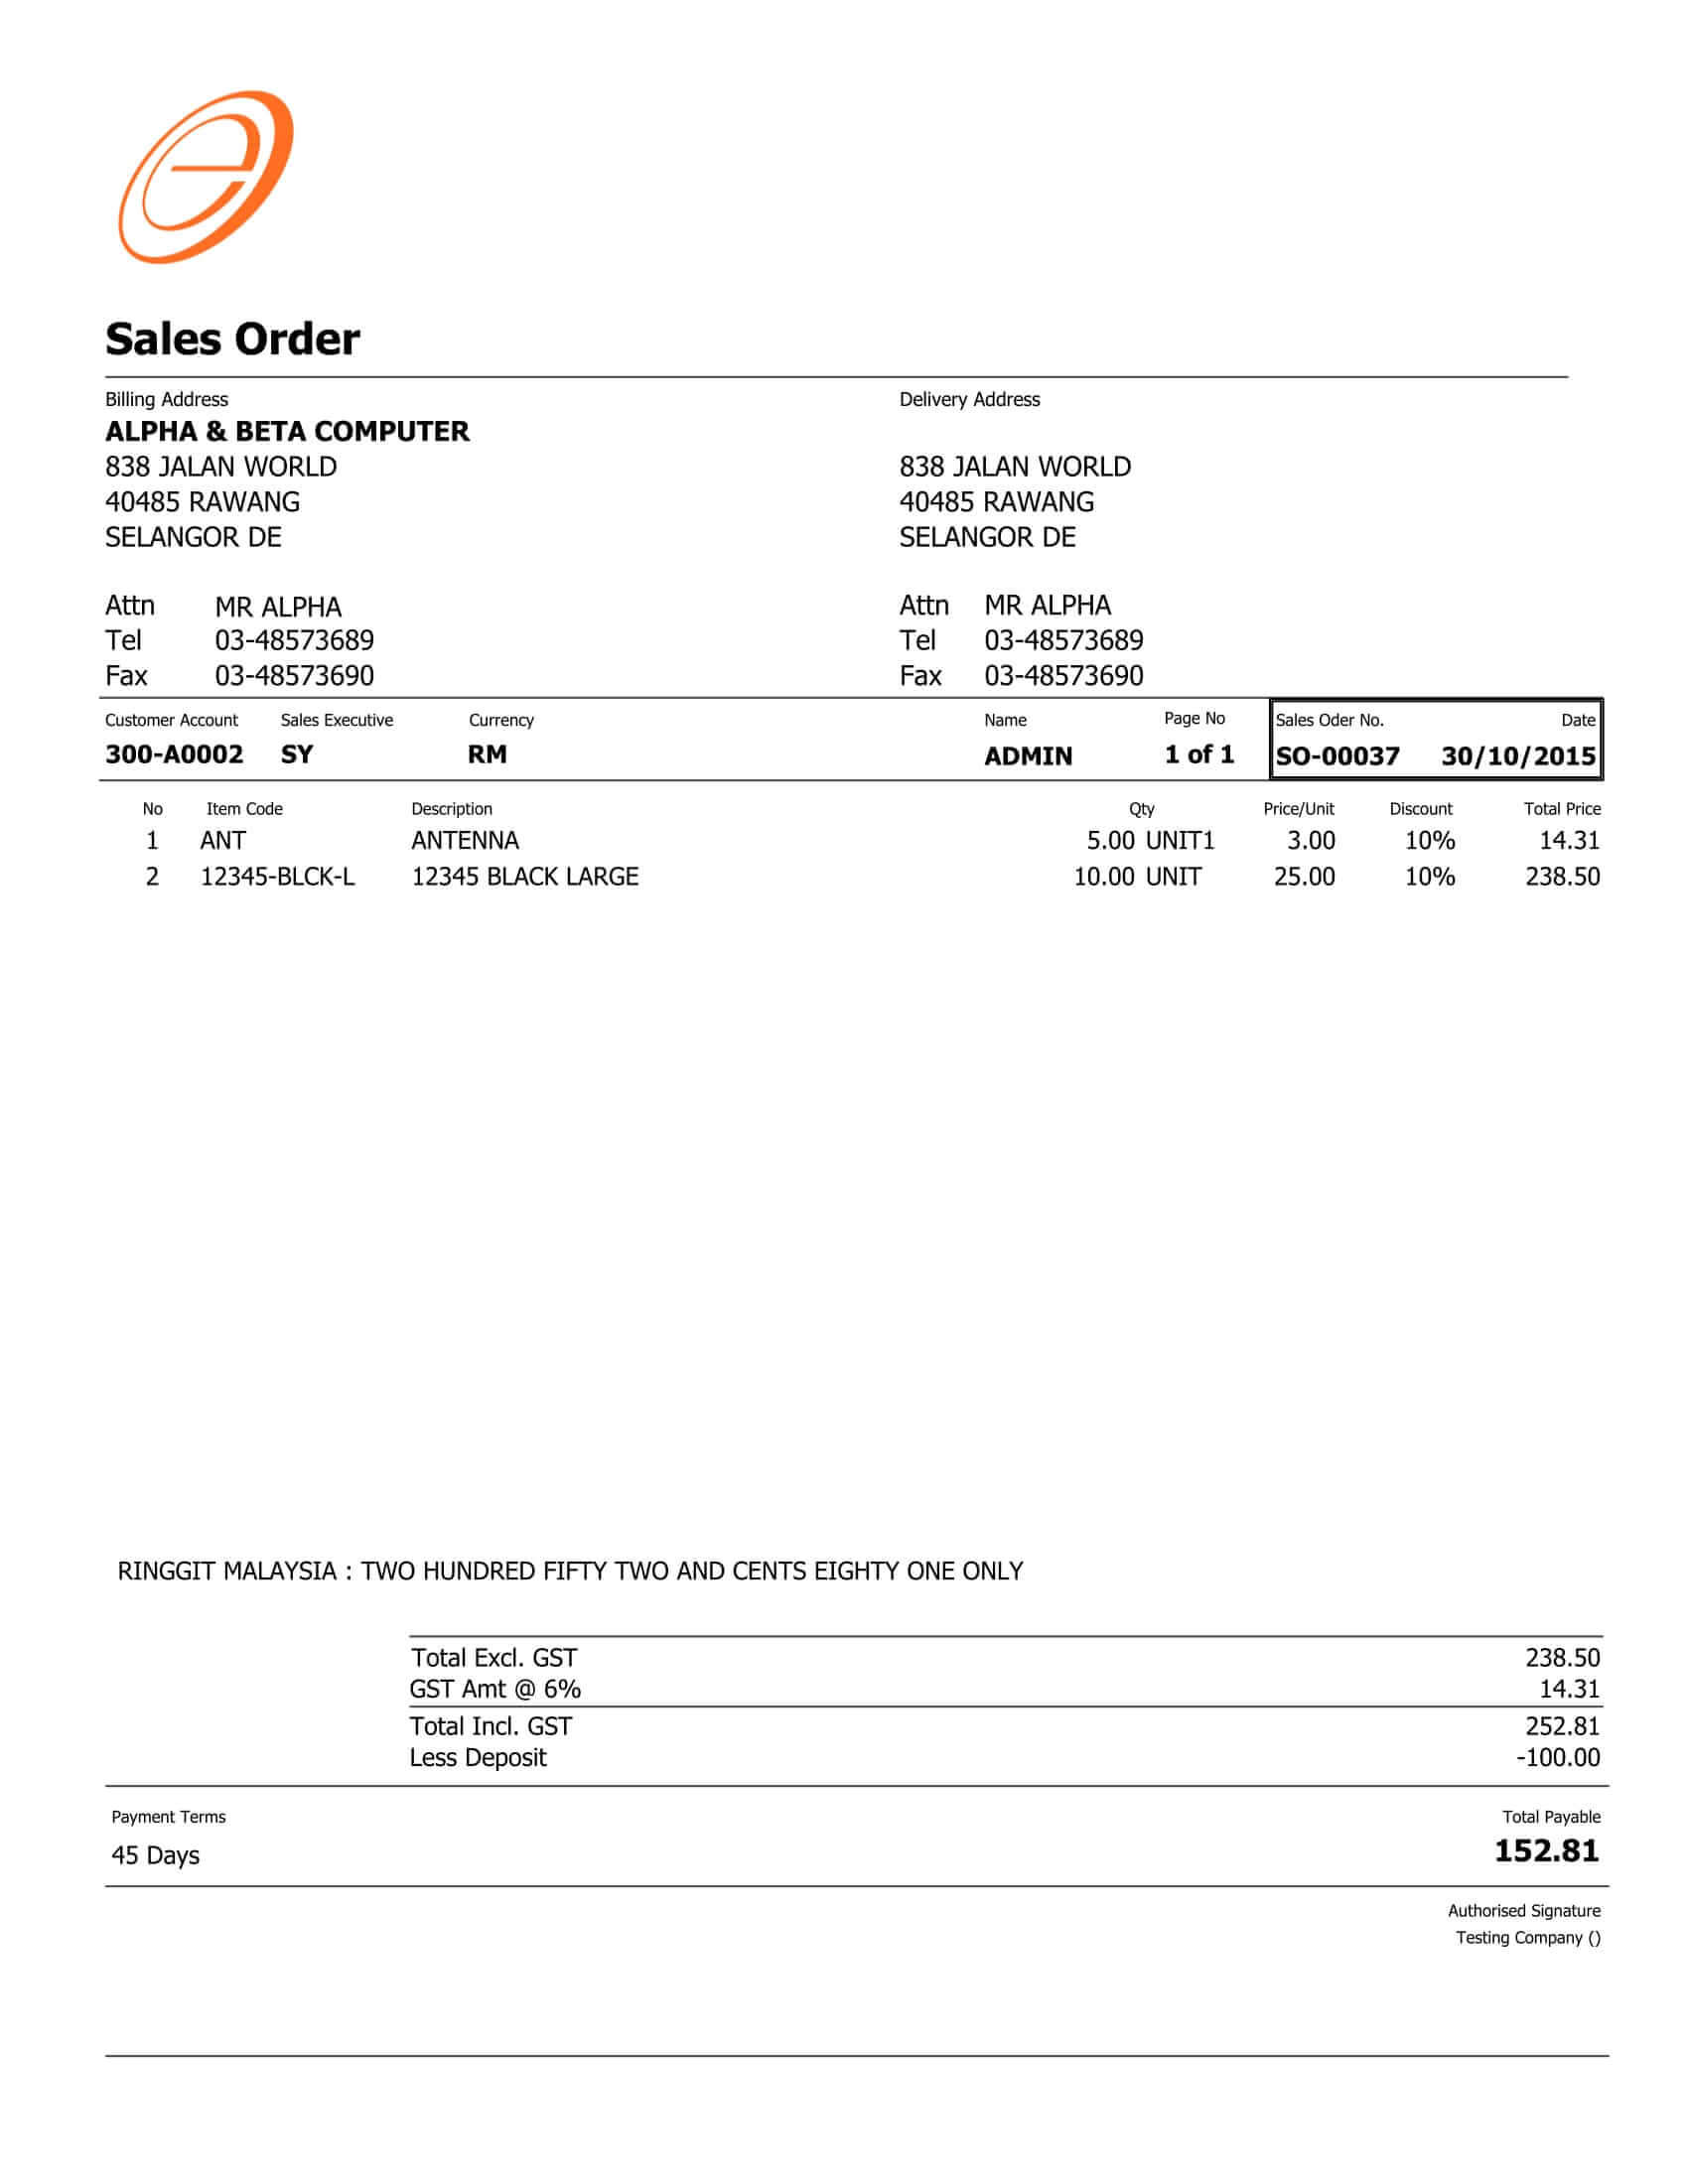 Sales Order 2 GST Deposit